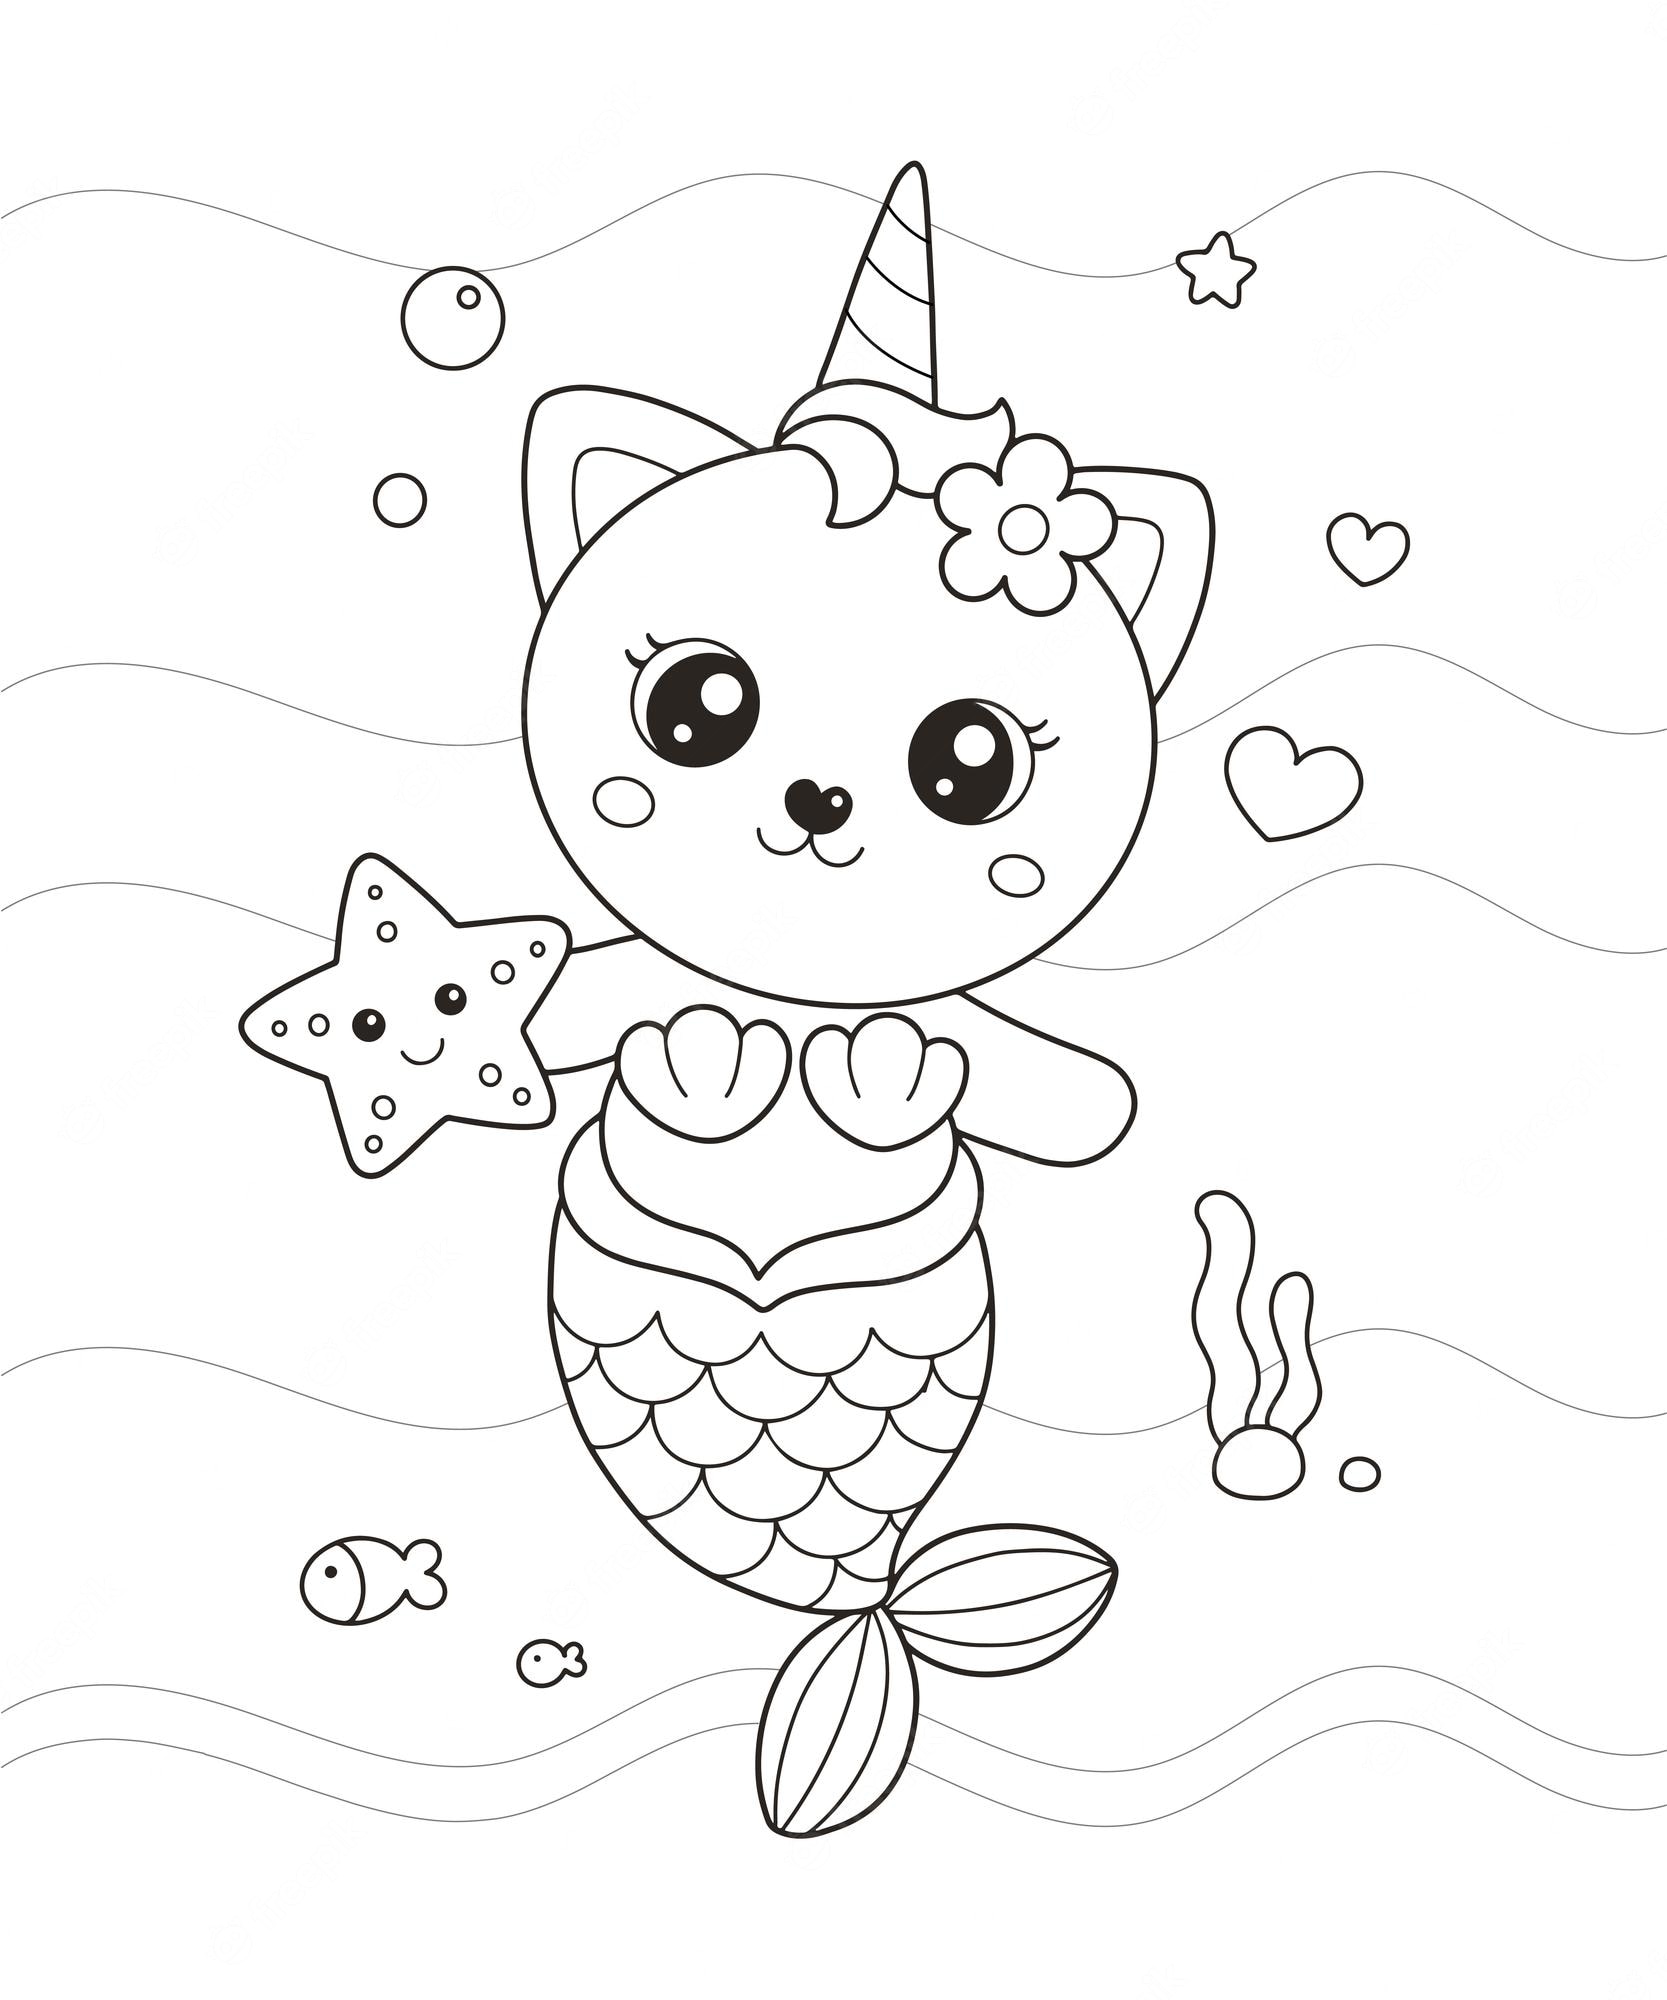 Premium Vector | Cute little mermaid cat drawing coloring page